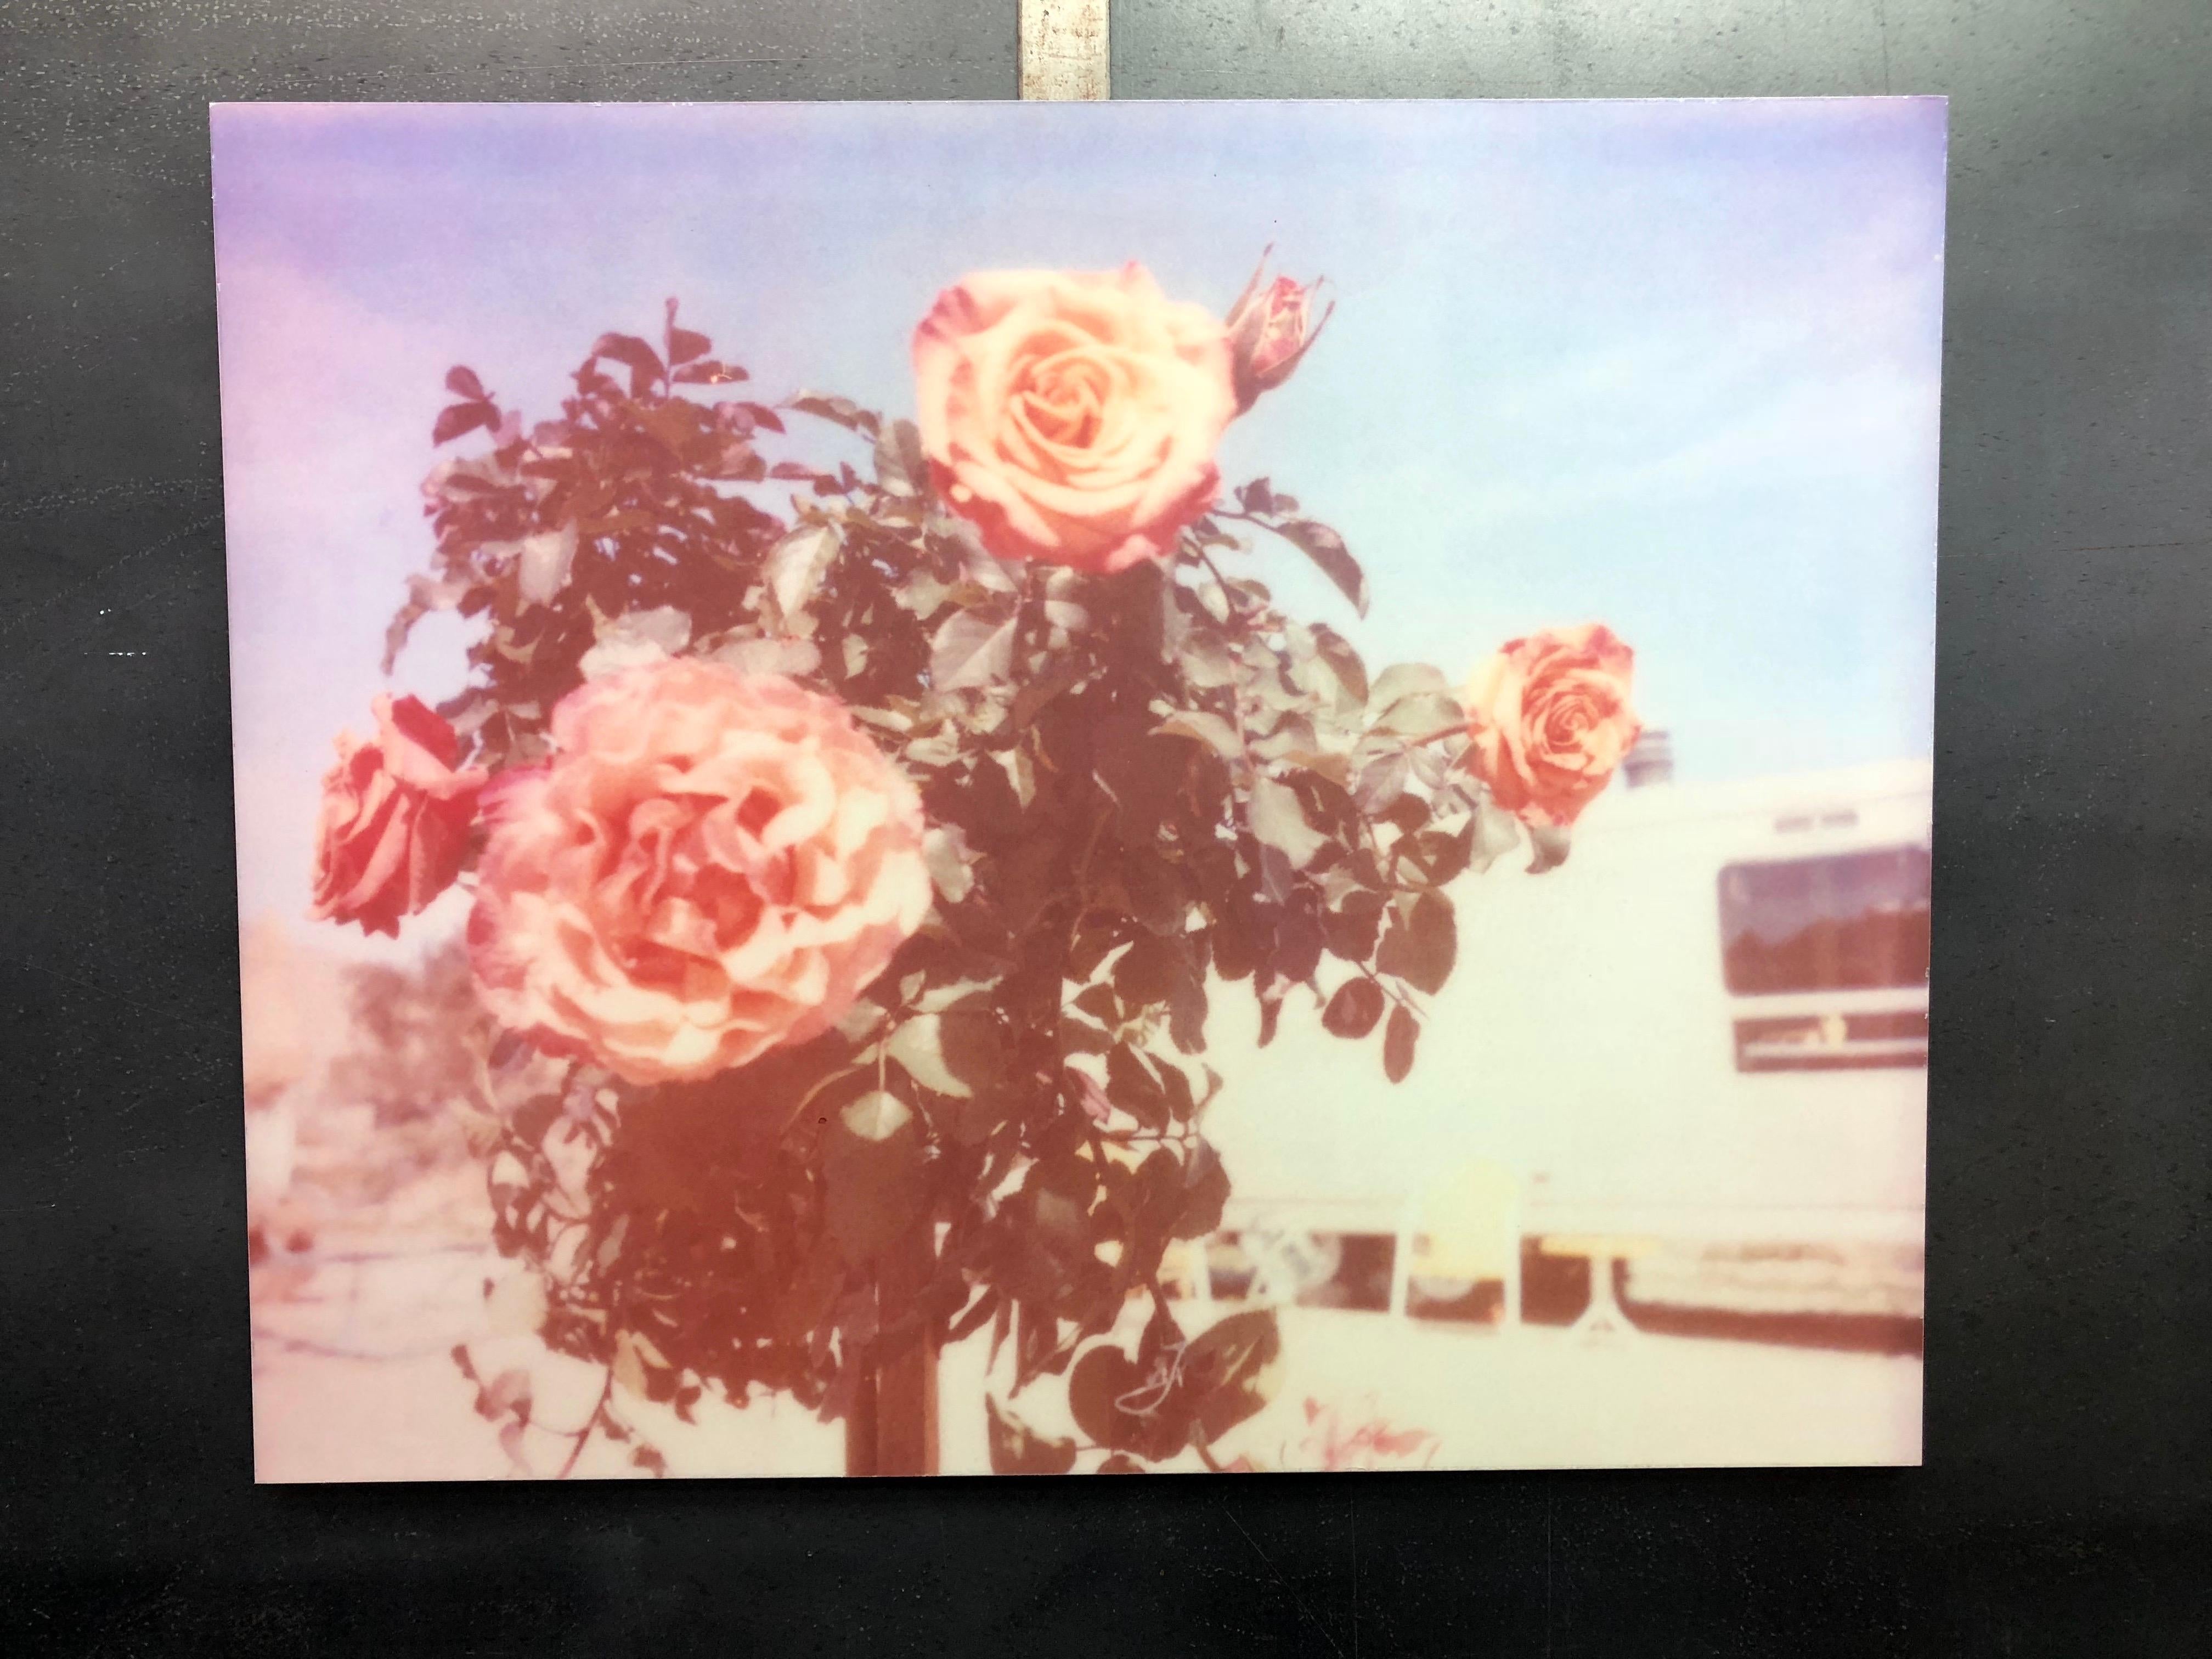  A Sunny Morning - Contemporary, Landscape, expired, Polaroid, analog, Rose 